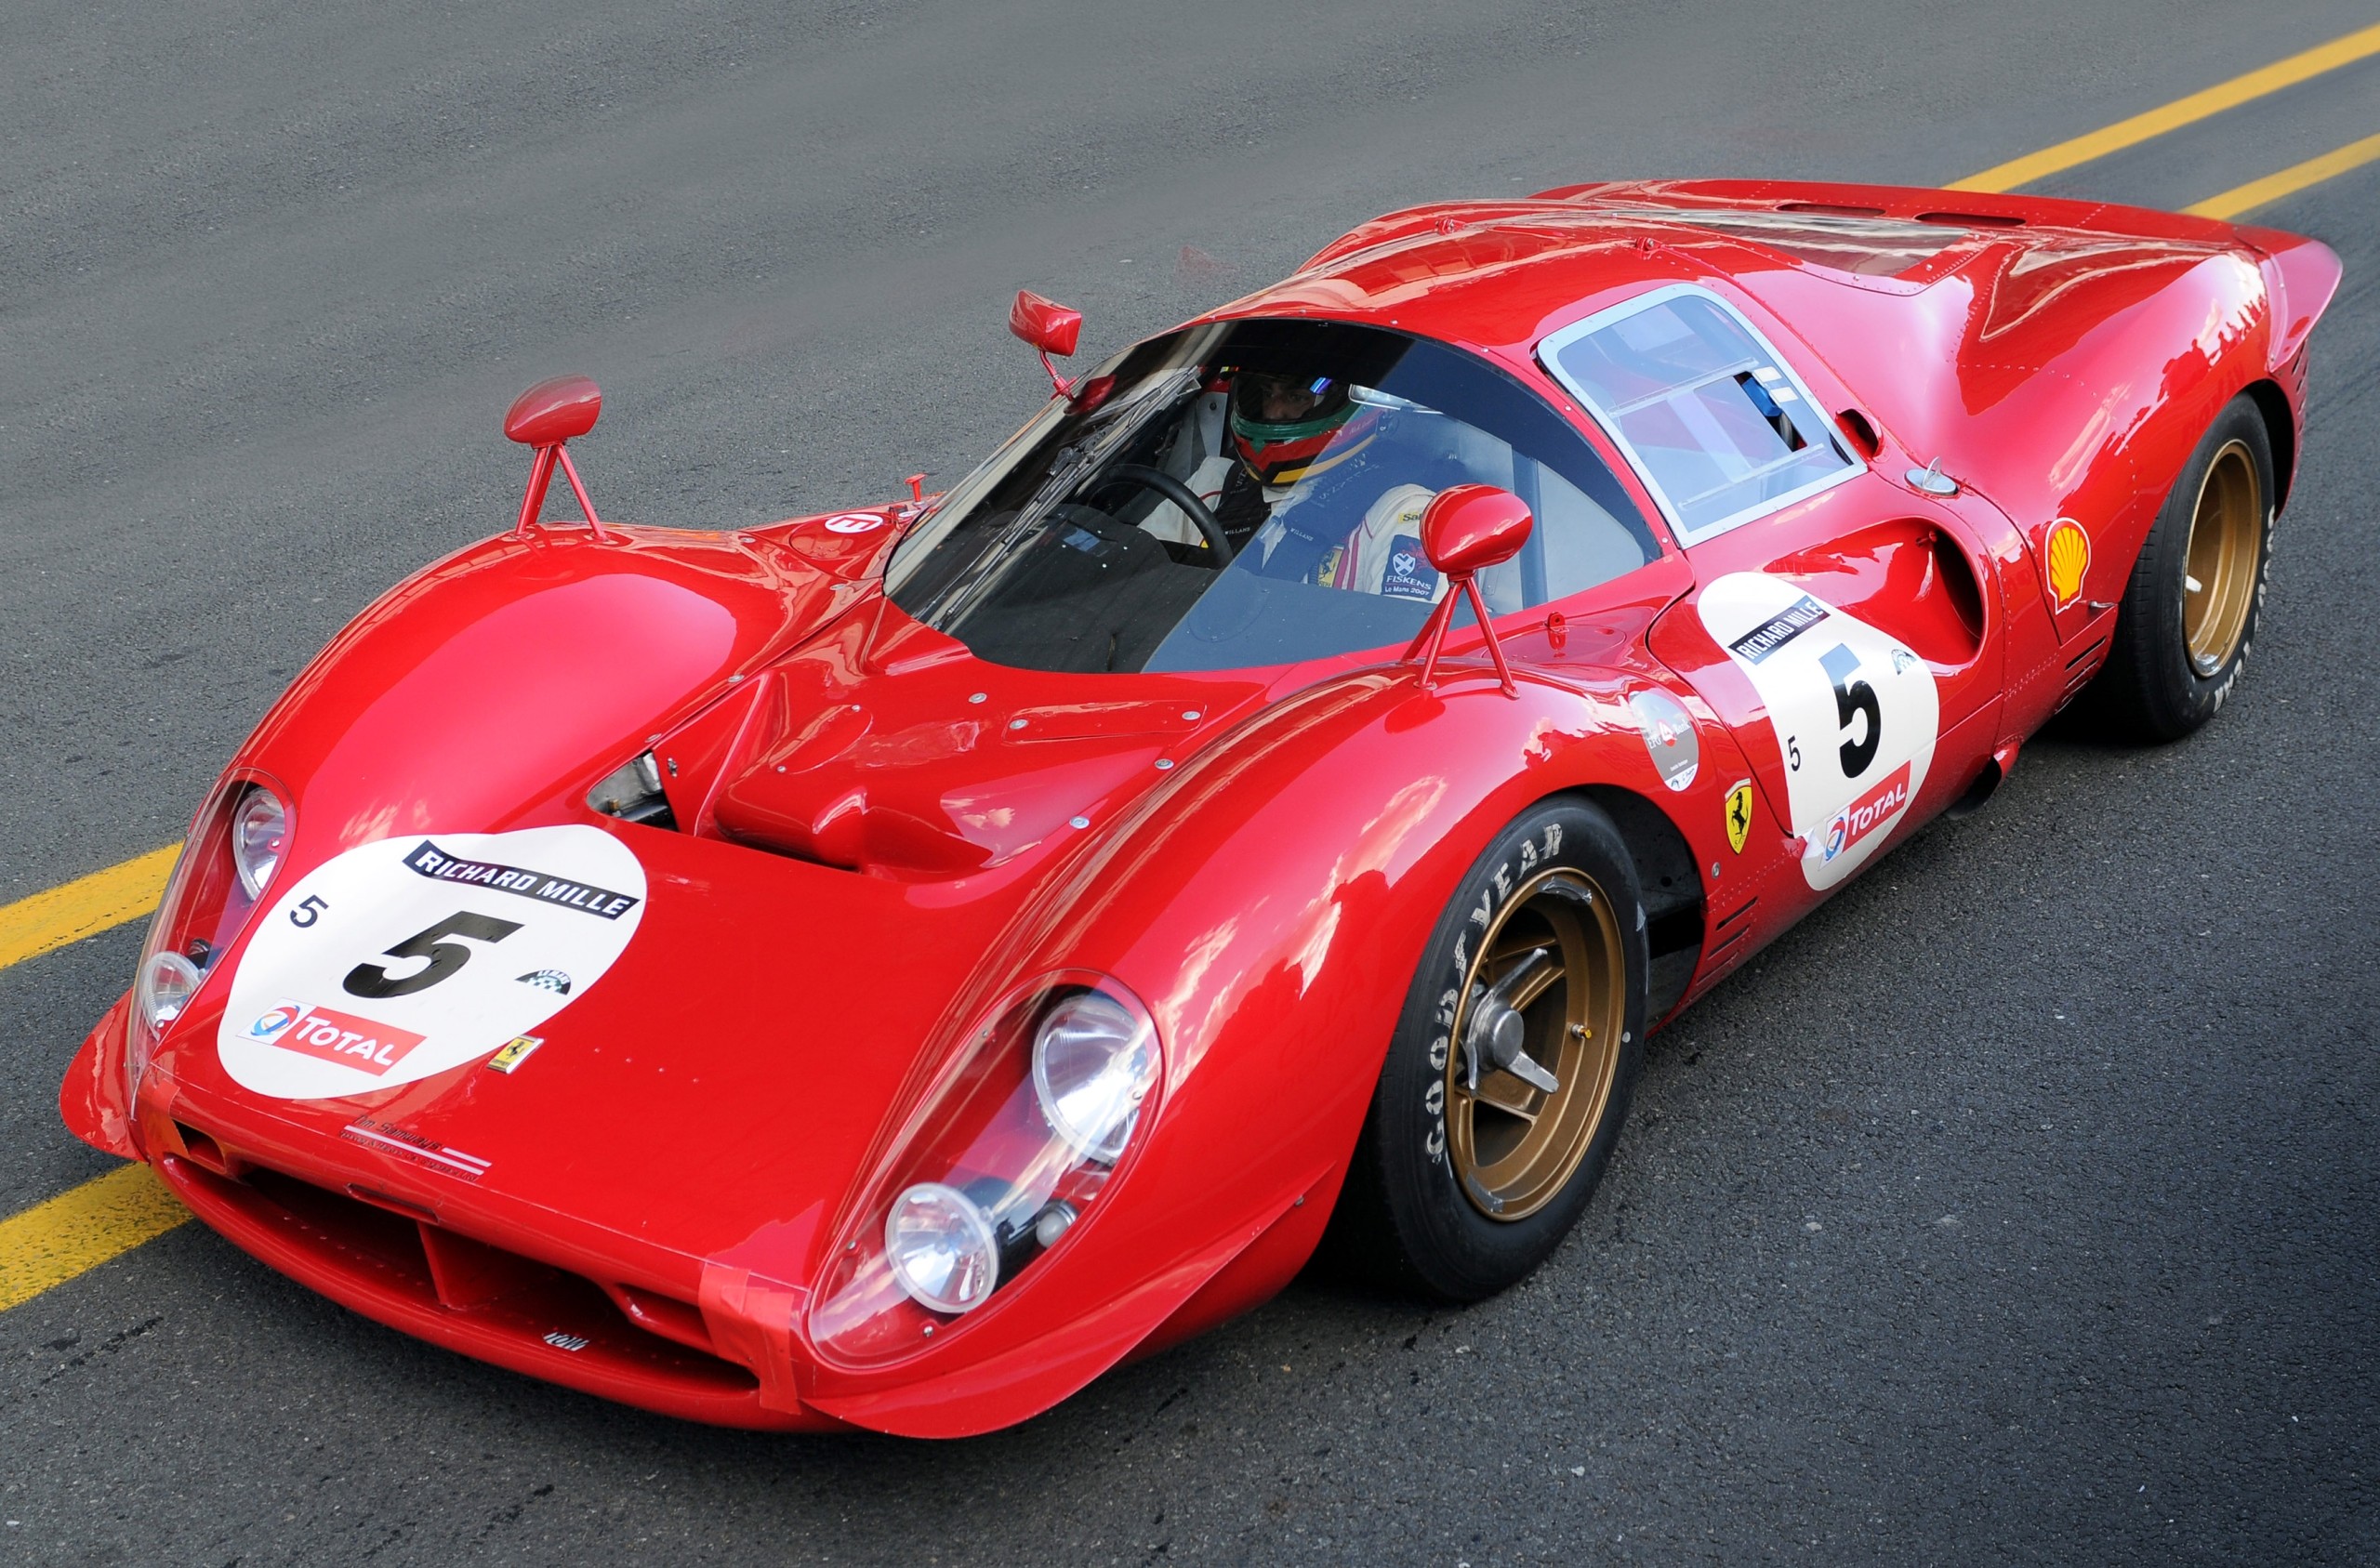 General 2560x1687 car race cars Ferrari Ferrari P4/5 red cars vehicle motorsport sport italian cars Stellantis